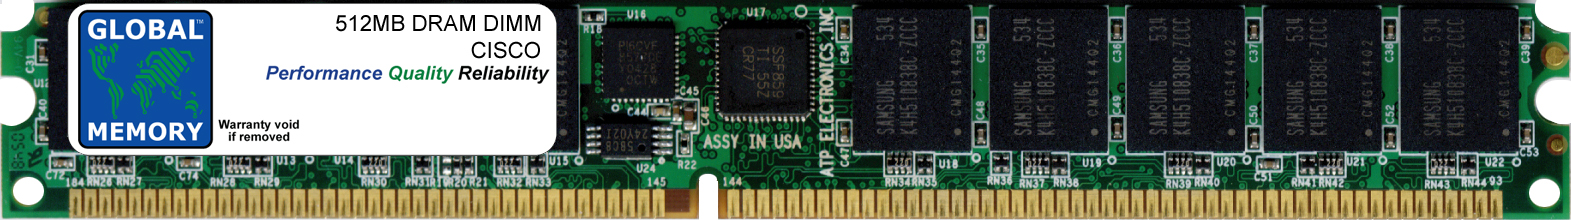 512MB DRAM DIMM MEMORY RAM FOR CISCO 2951 ROUTER (MEM-2951-512MB)